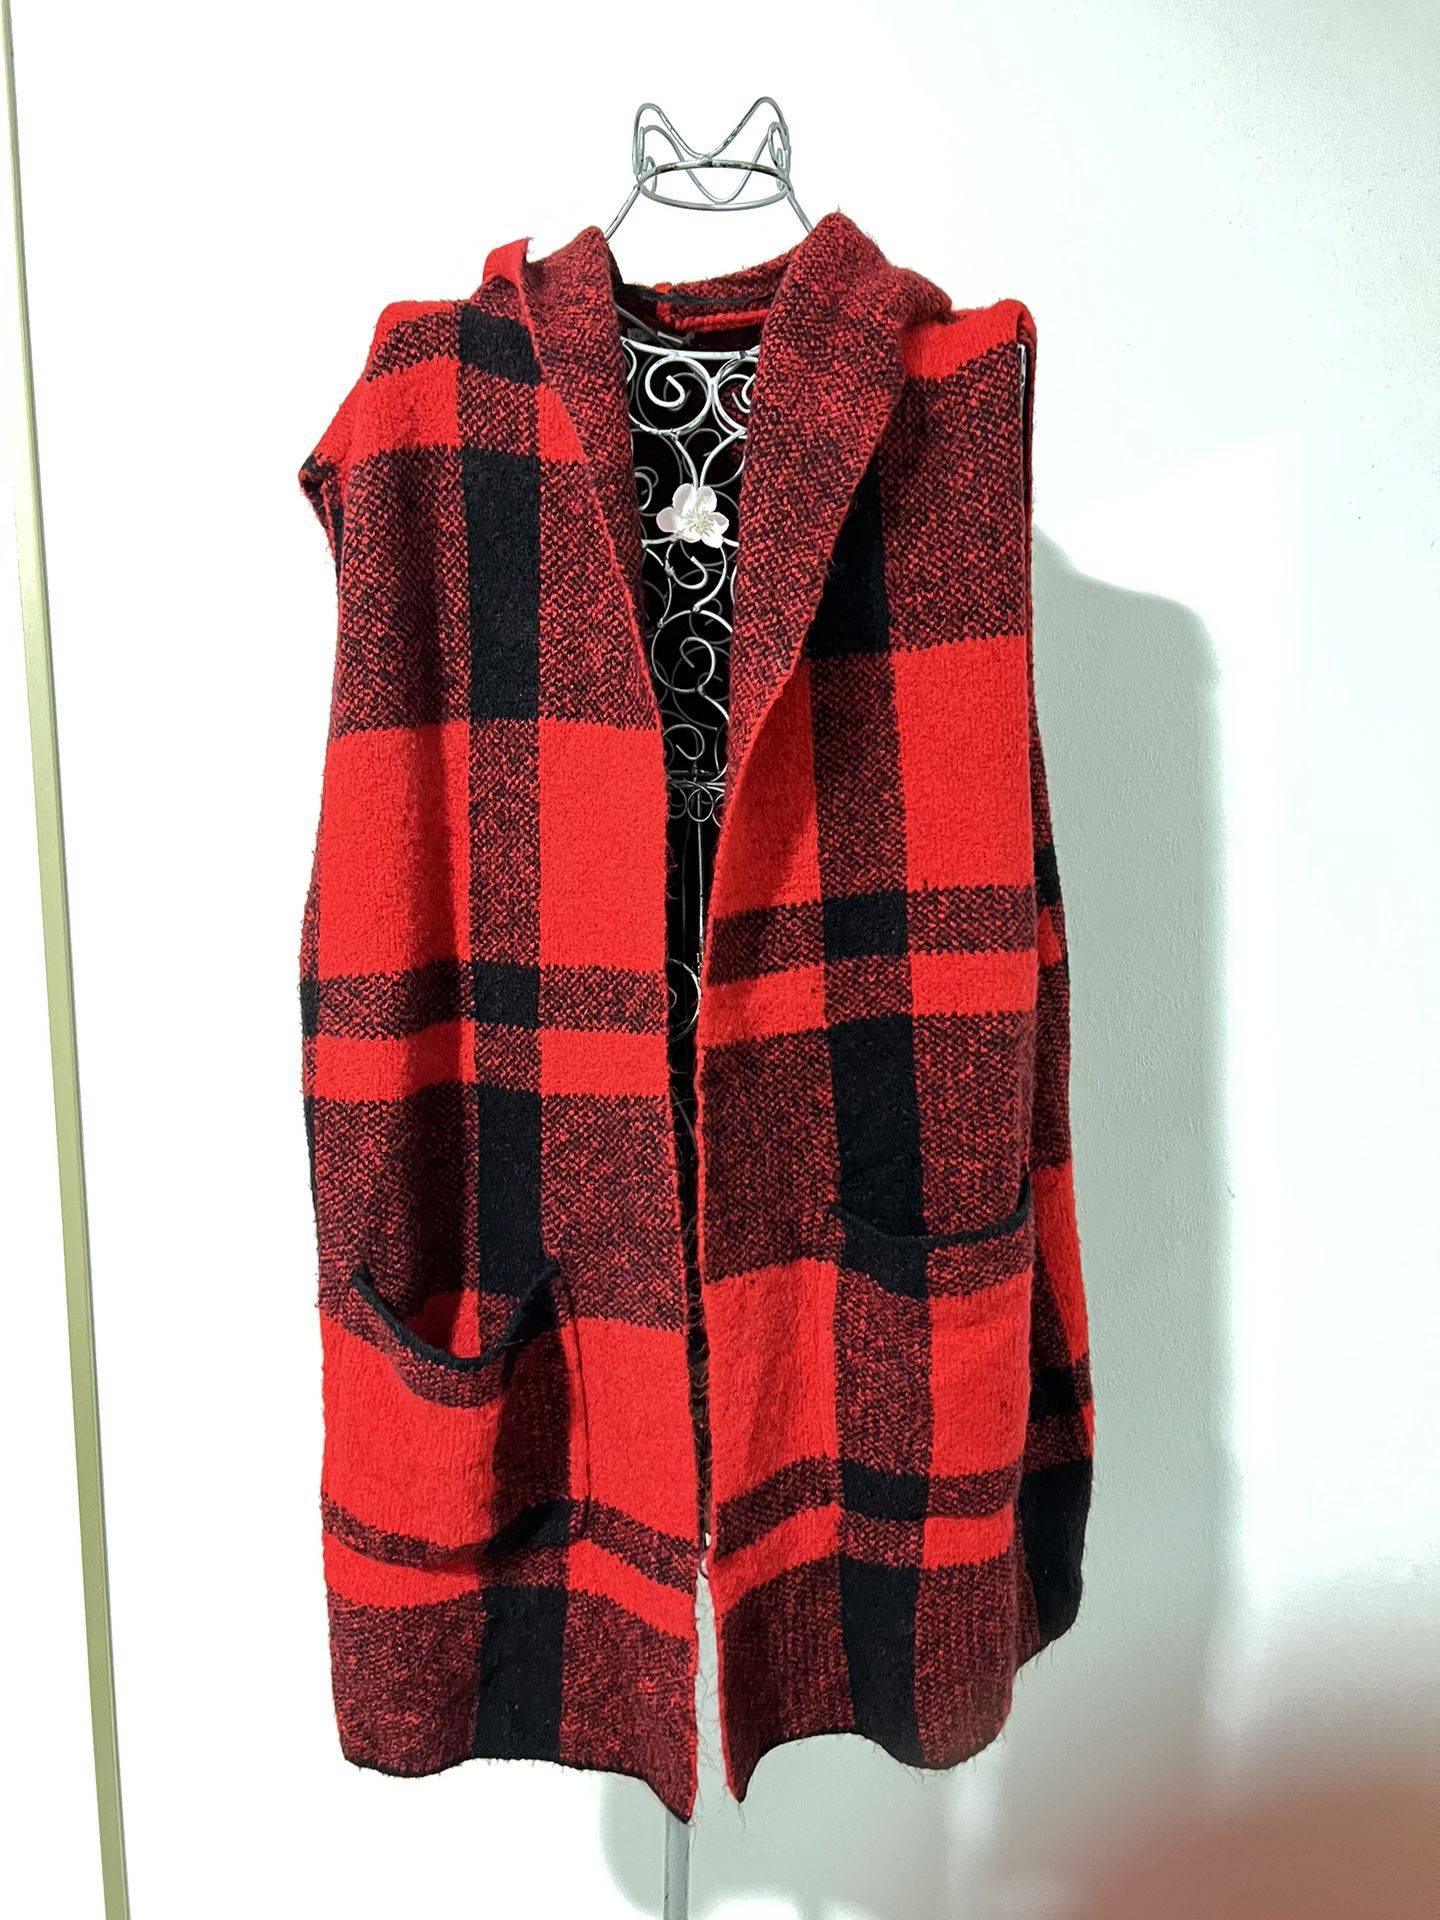 Cardigan EST. 1340 Winter Fleece Jacket Coat… Size 22/24 W